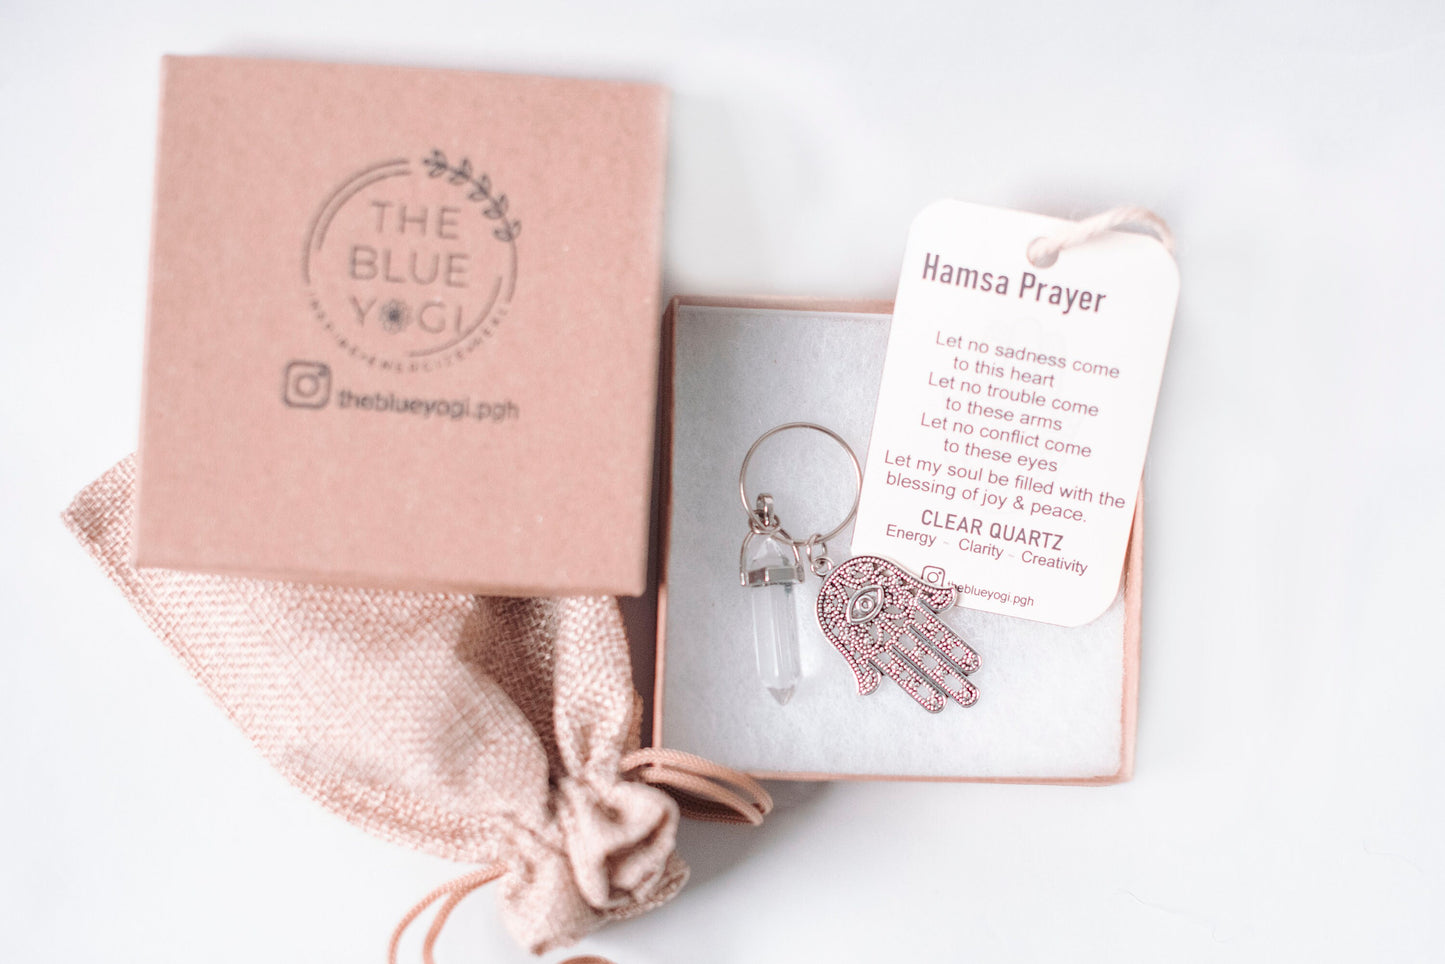 Hamsa & Clear Quartz Key chain/Key-ring - Small gifts - Theblueyogi